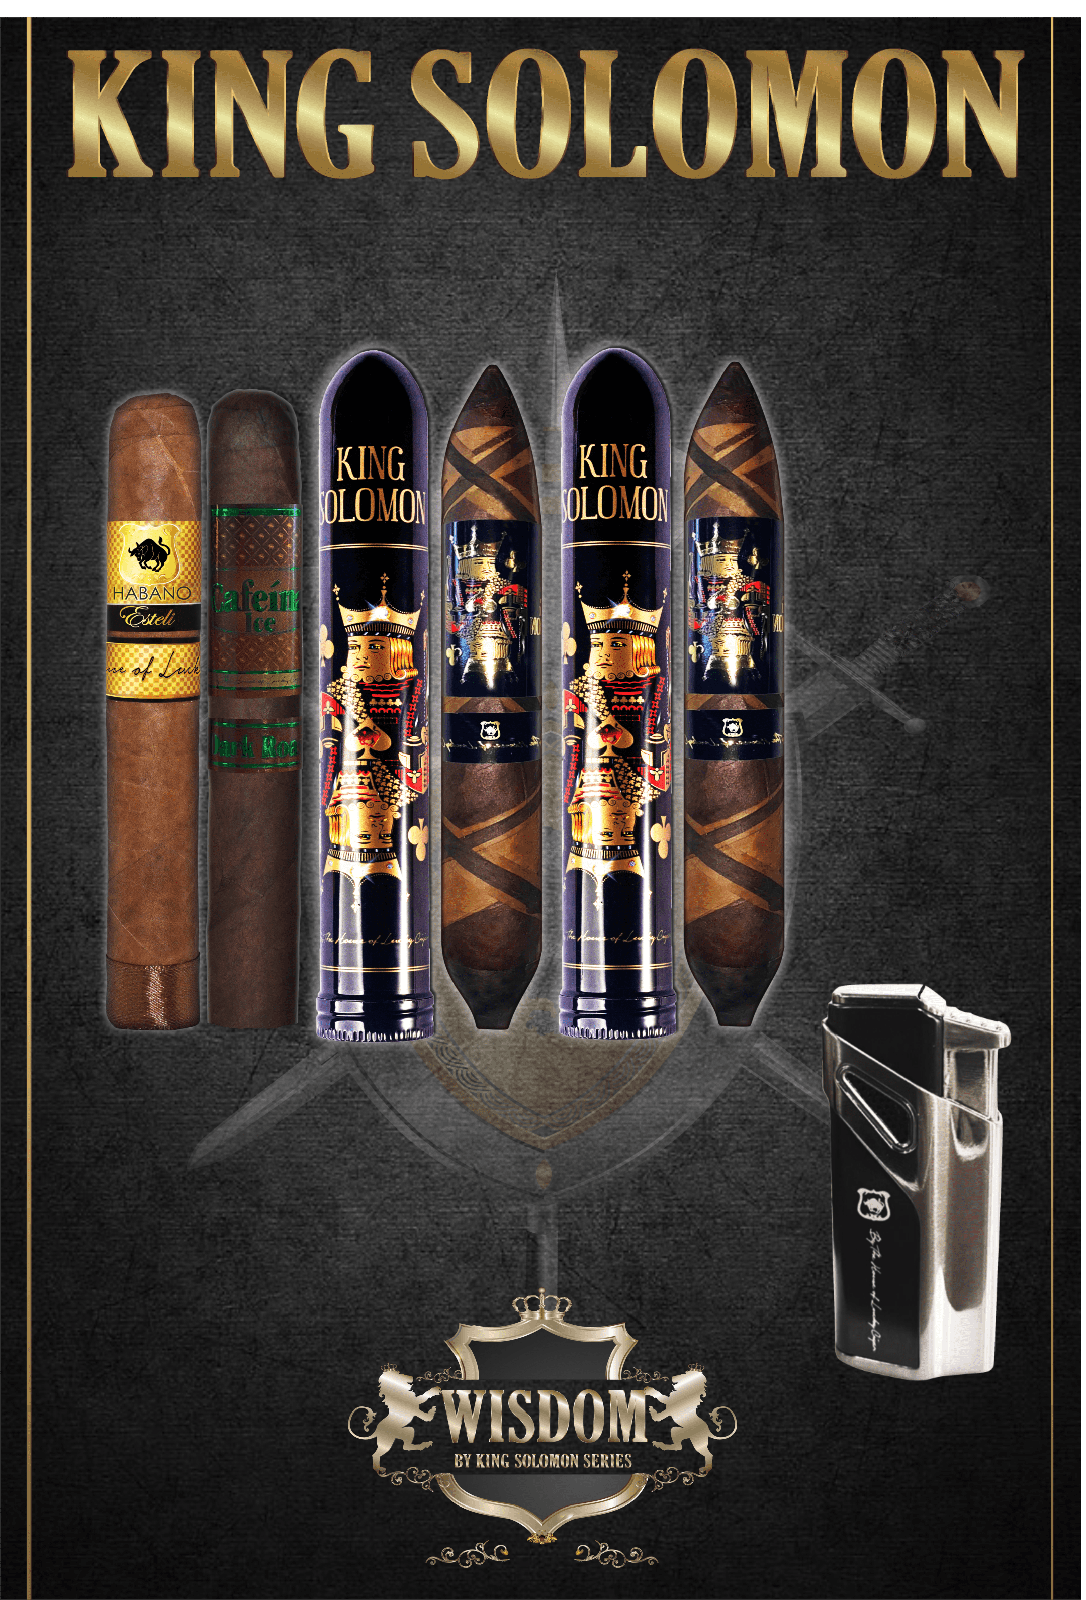 From The King Solomon Series: 2 Solomon 7x60 Cigars, 1 Cafeina Dark 5x58, 1 Habano Esteli 6x60 with Torch Lighter Set